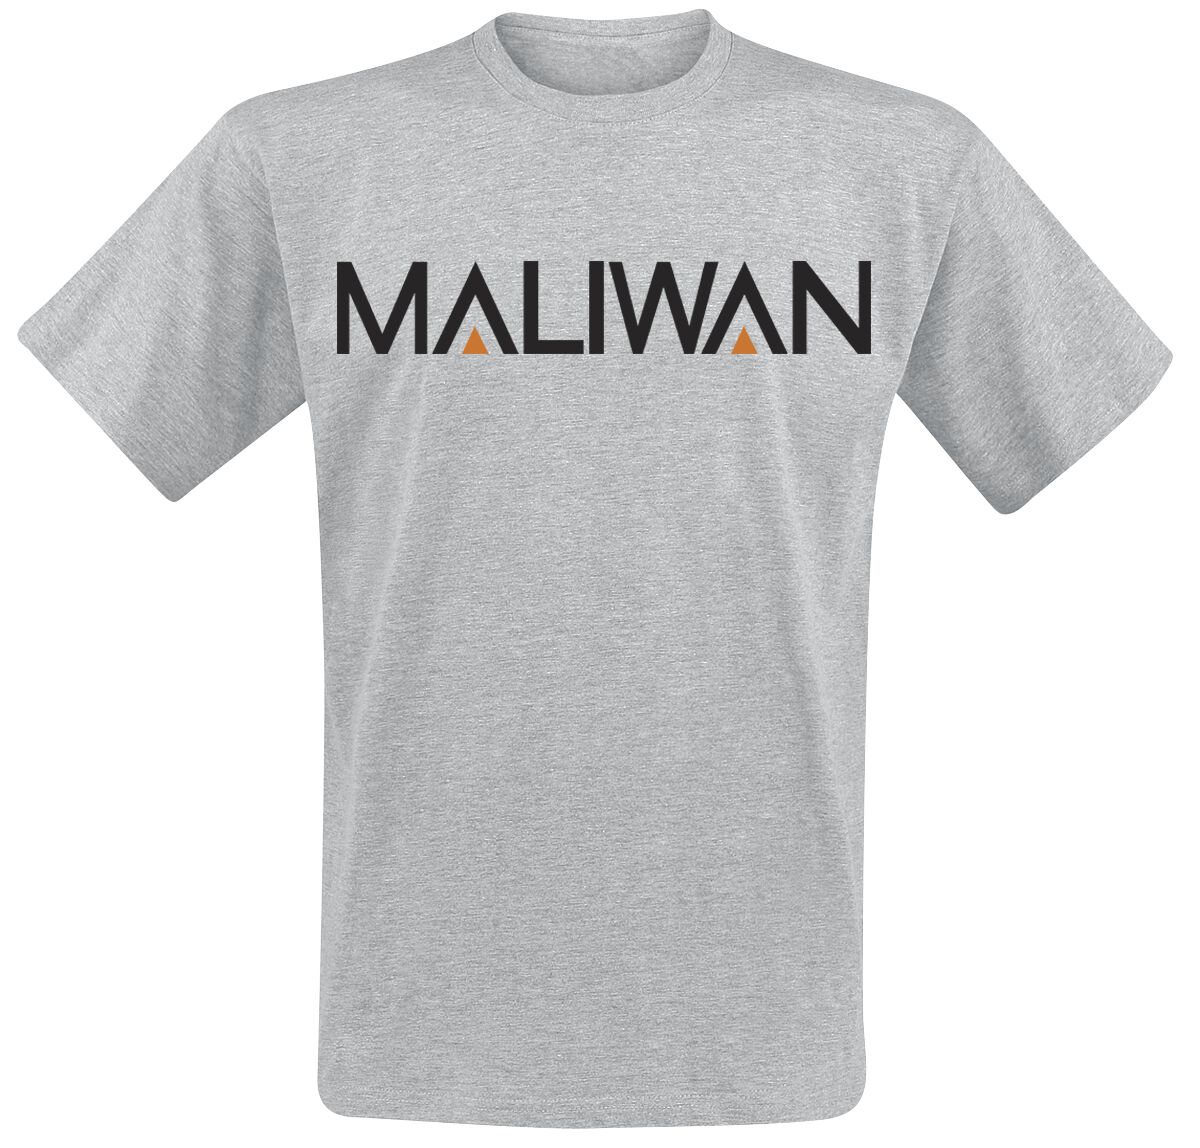 Borderlands 3 - Maliwan T-Shirt grau meliert in XL